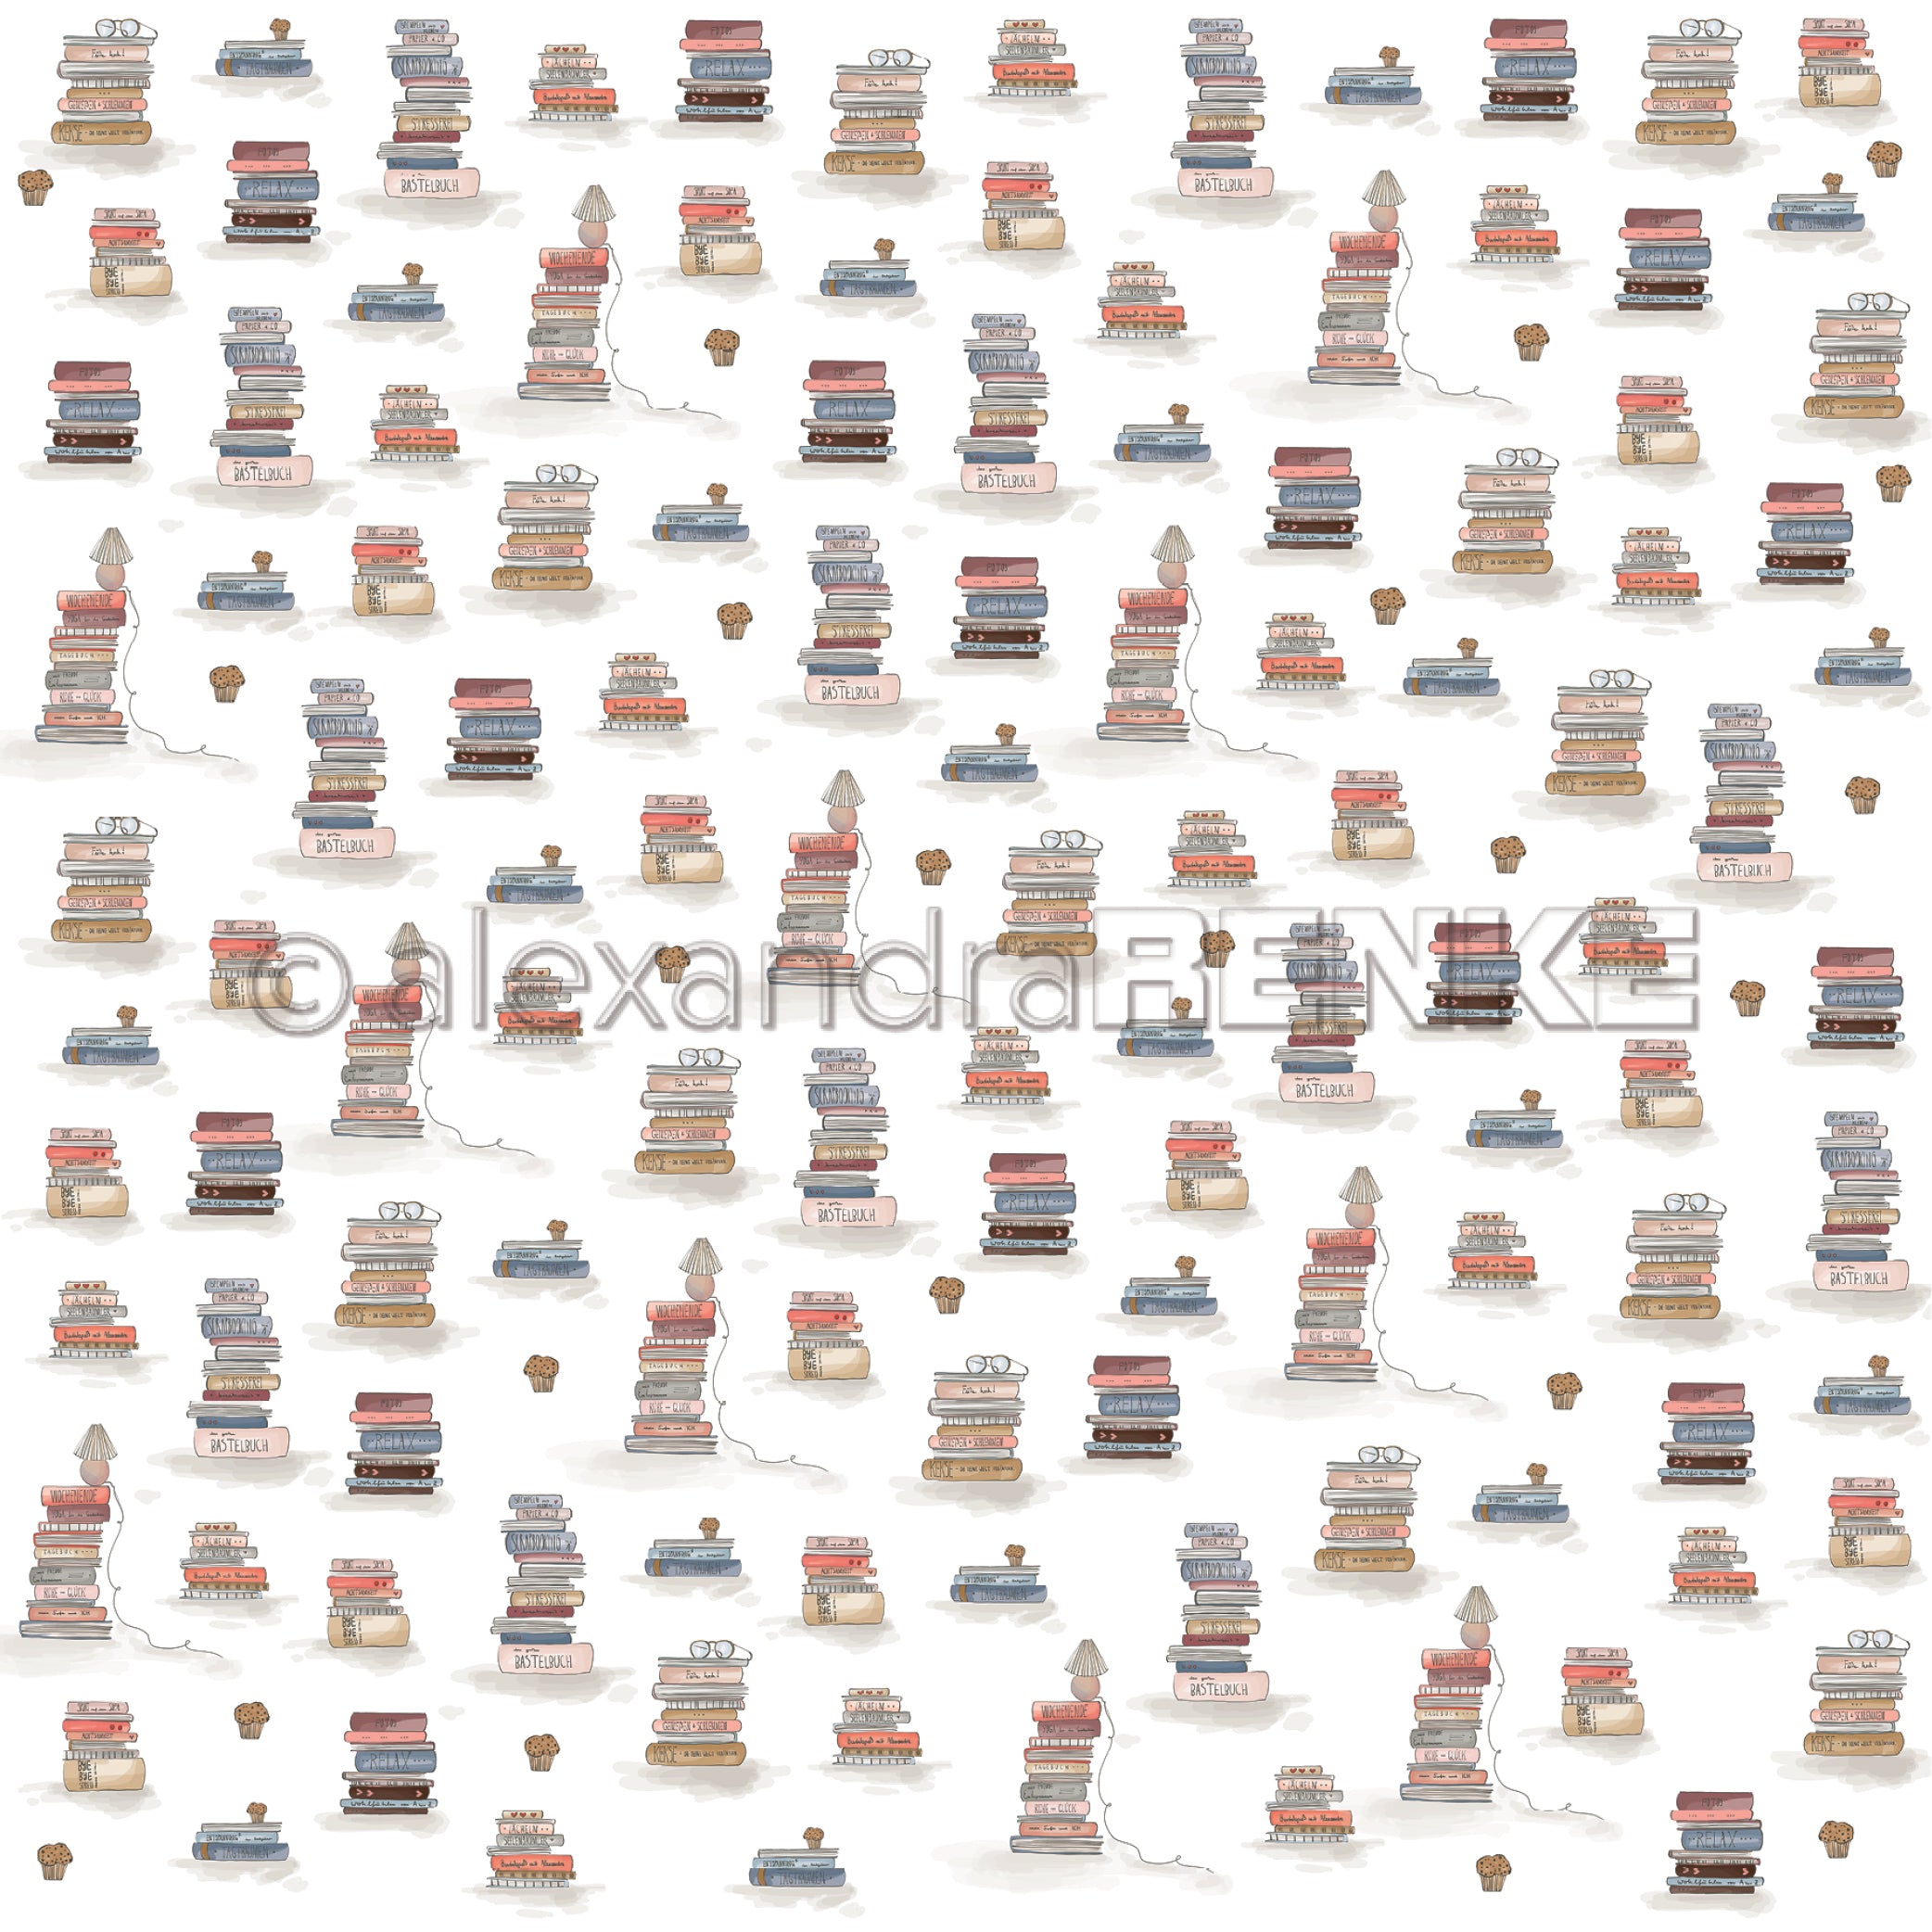 Alexandra Renke -  Pile of books pattern -  12x12"